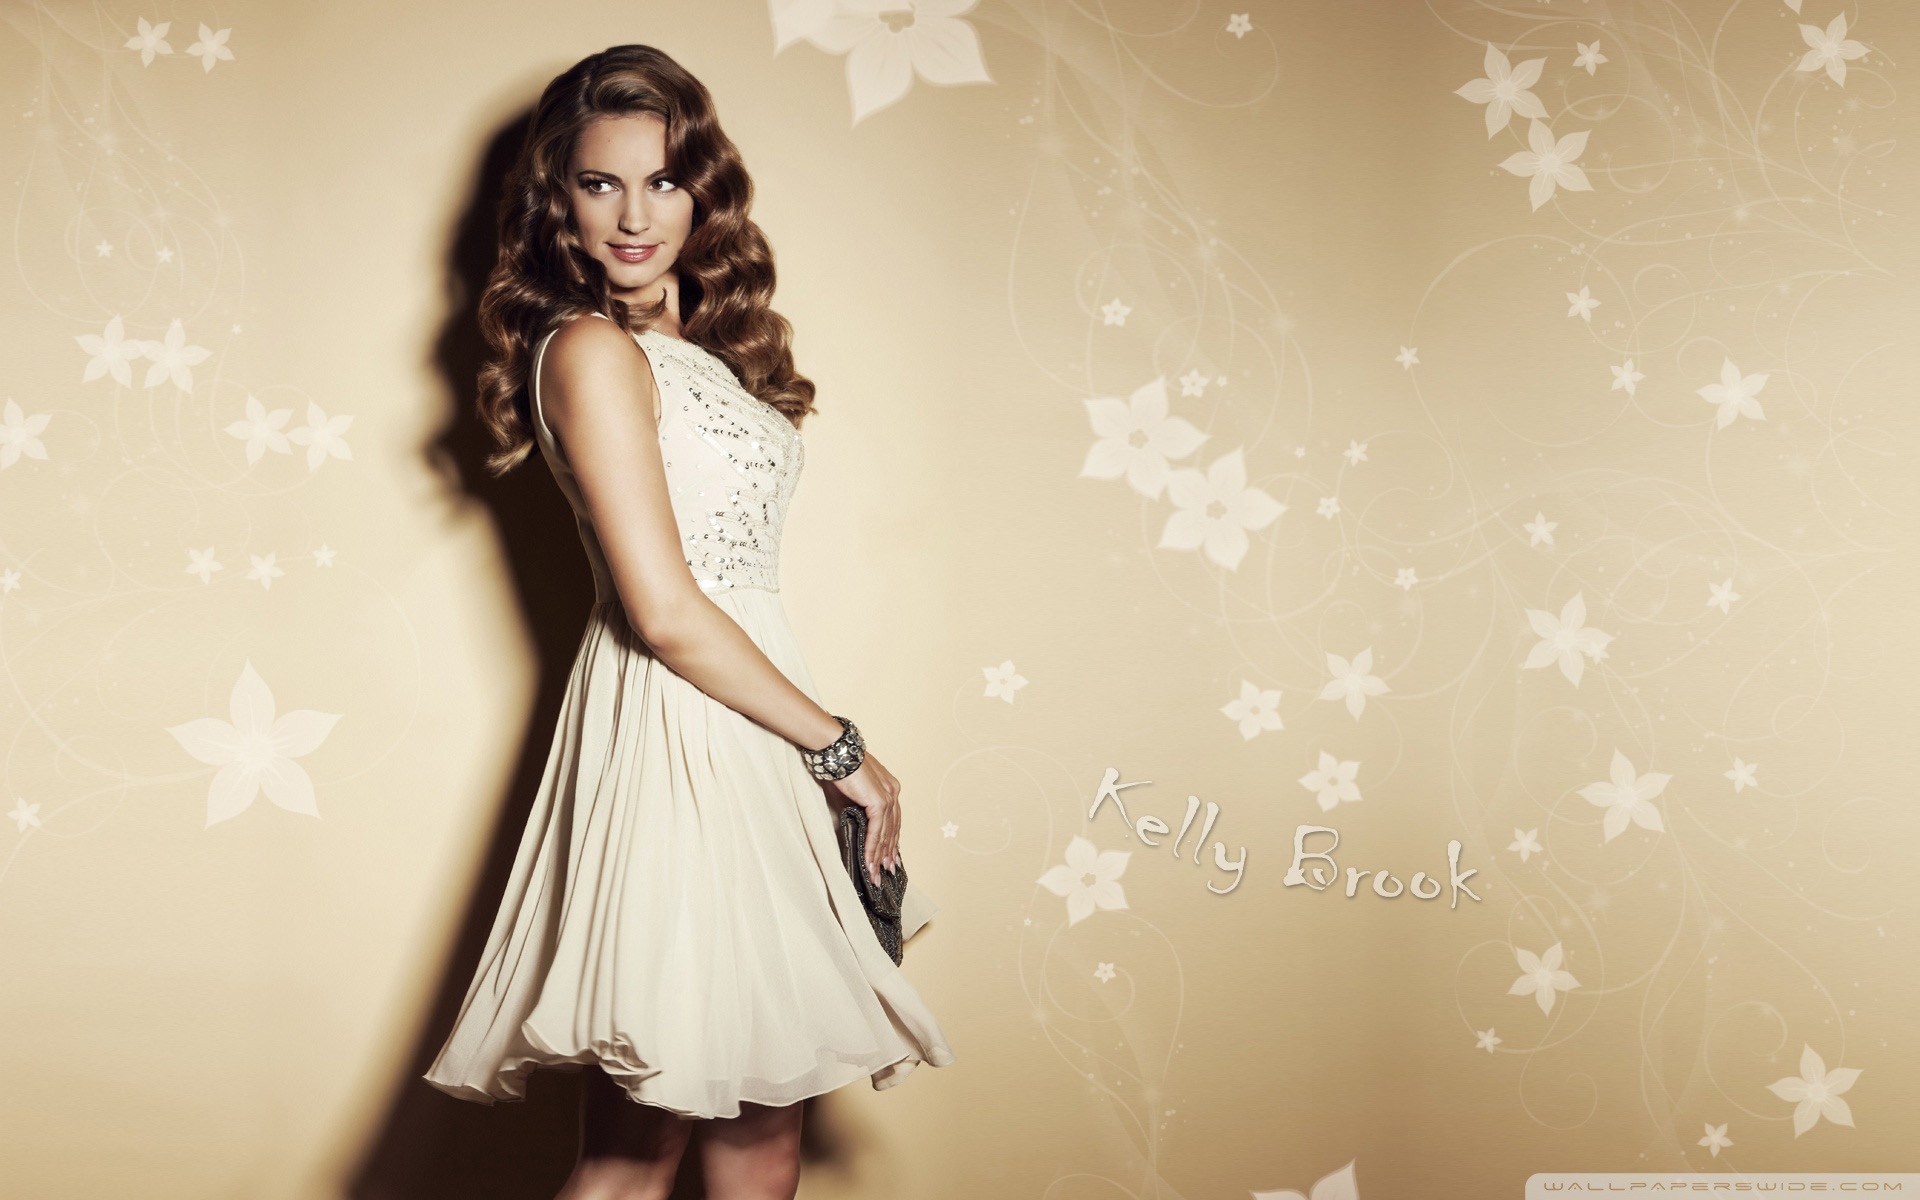 kelly brook wallpaper hd,white,clothing,dress,fashion model,beauty